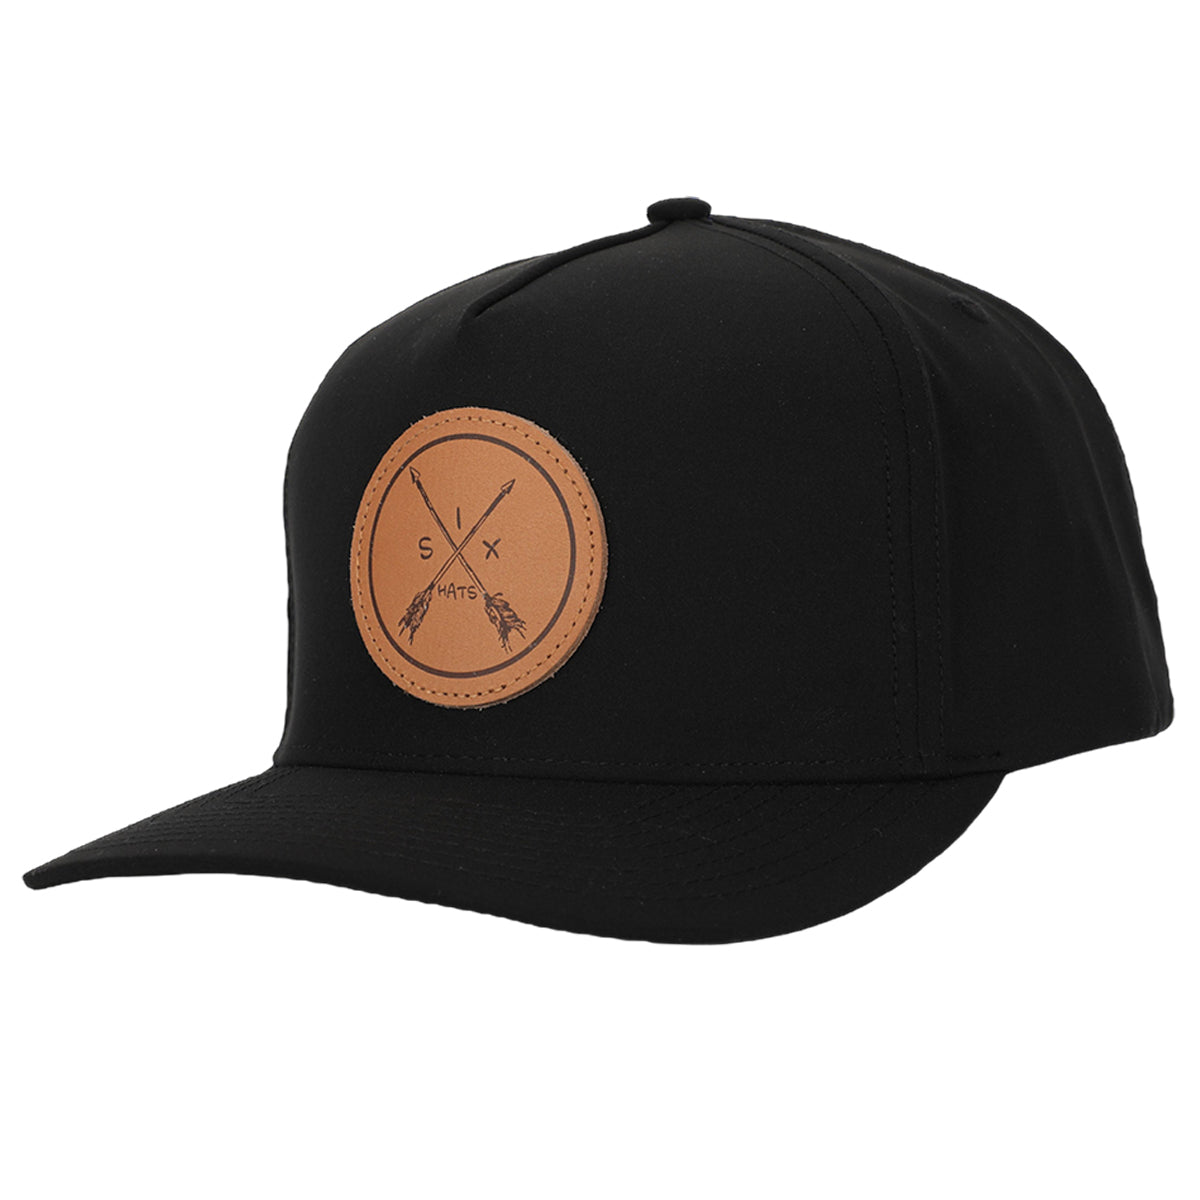 Black Signature Hat Best Online Hat Store SixHats Supply Co